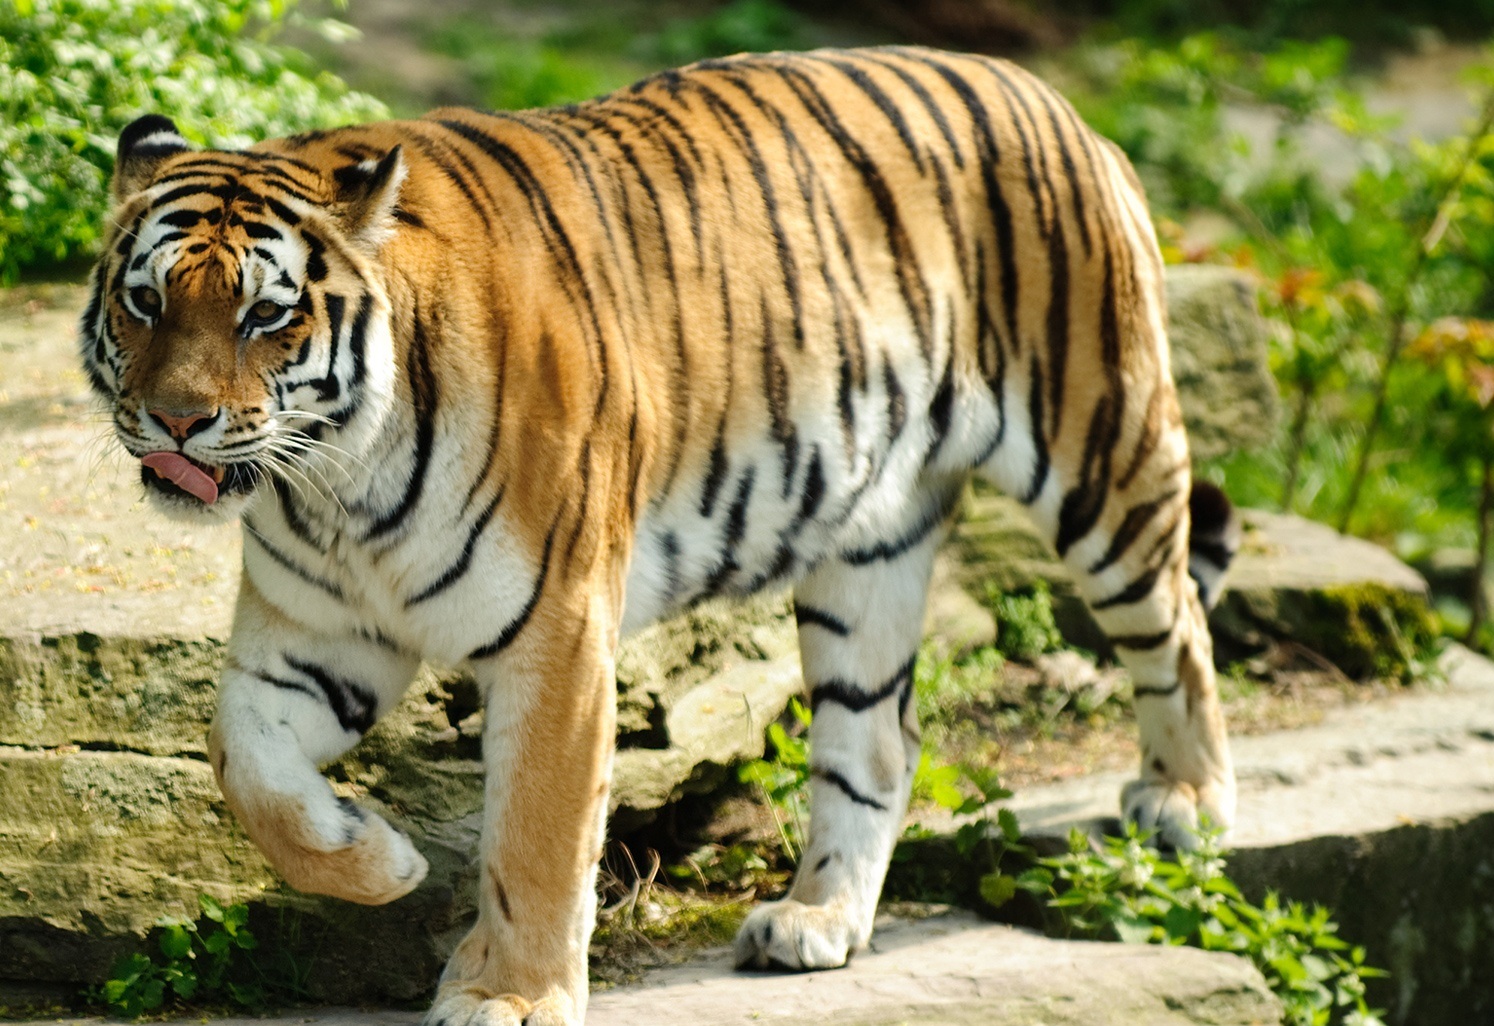 Best Tiger Wallpaper - Tiger Images Hd Download - 1494x1026 Wallpaper -  